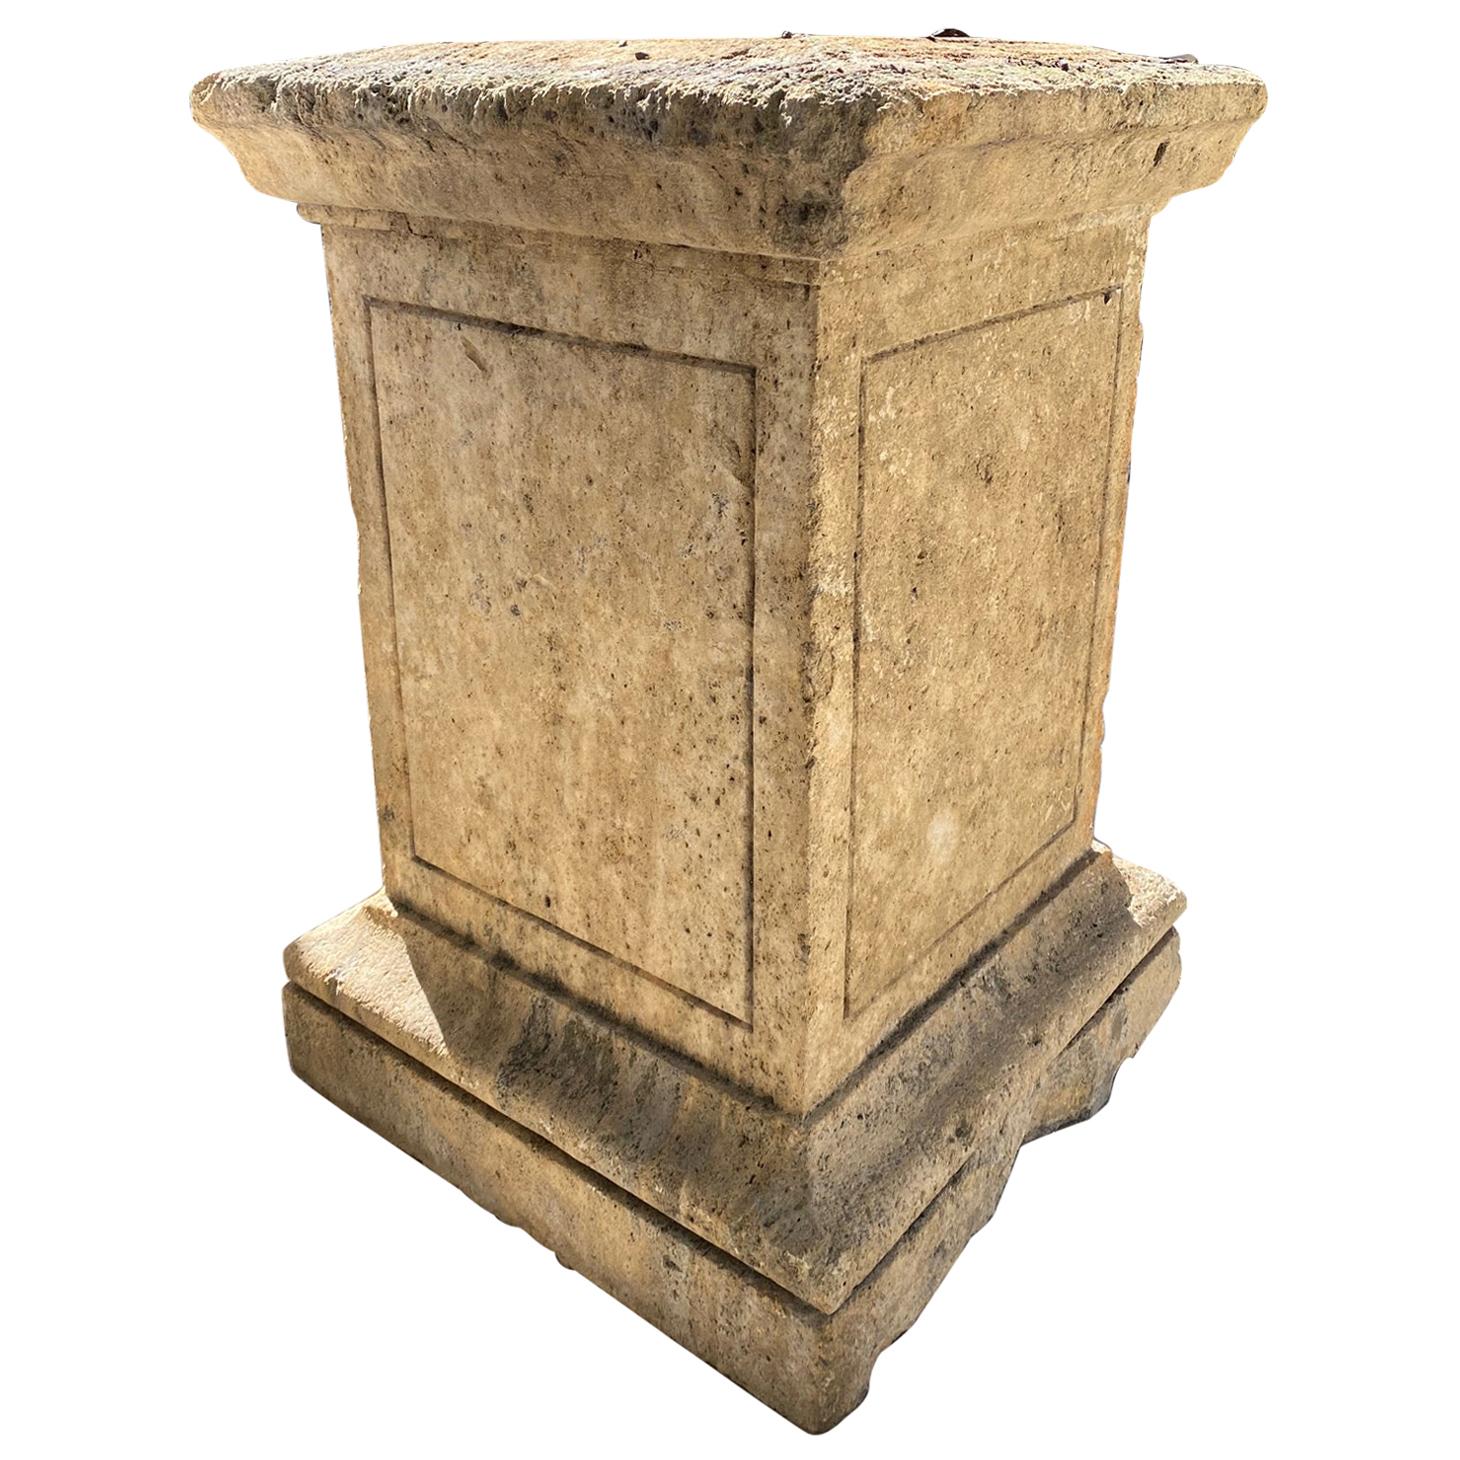 The Pedestal Stone Pedestal Column Post Fountain Base Center block center piece